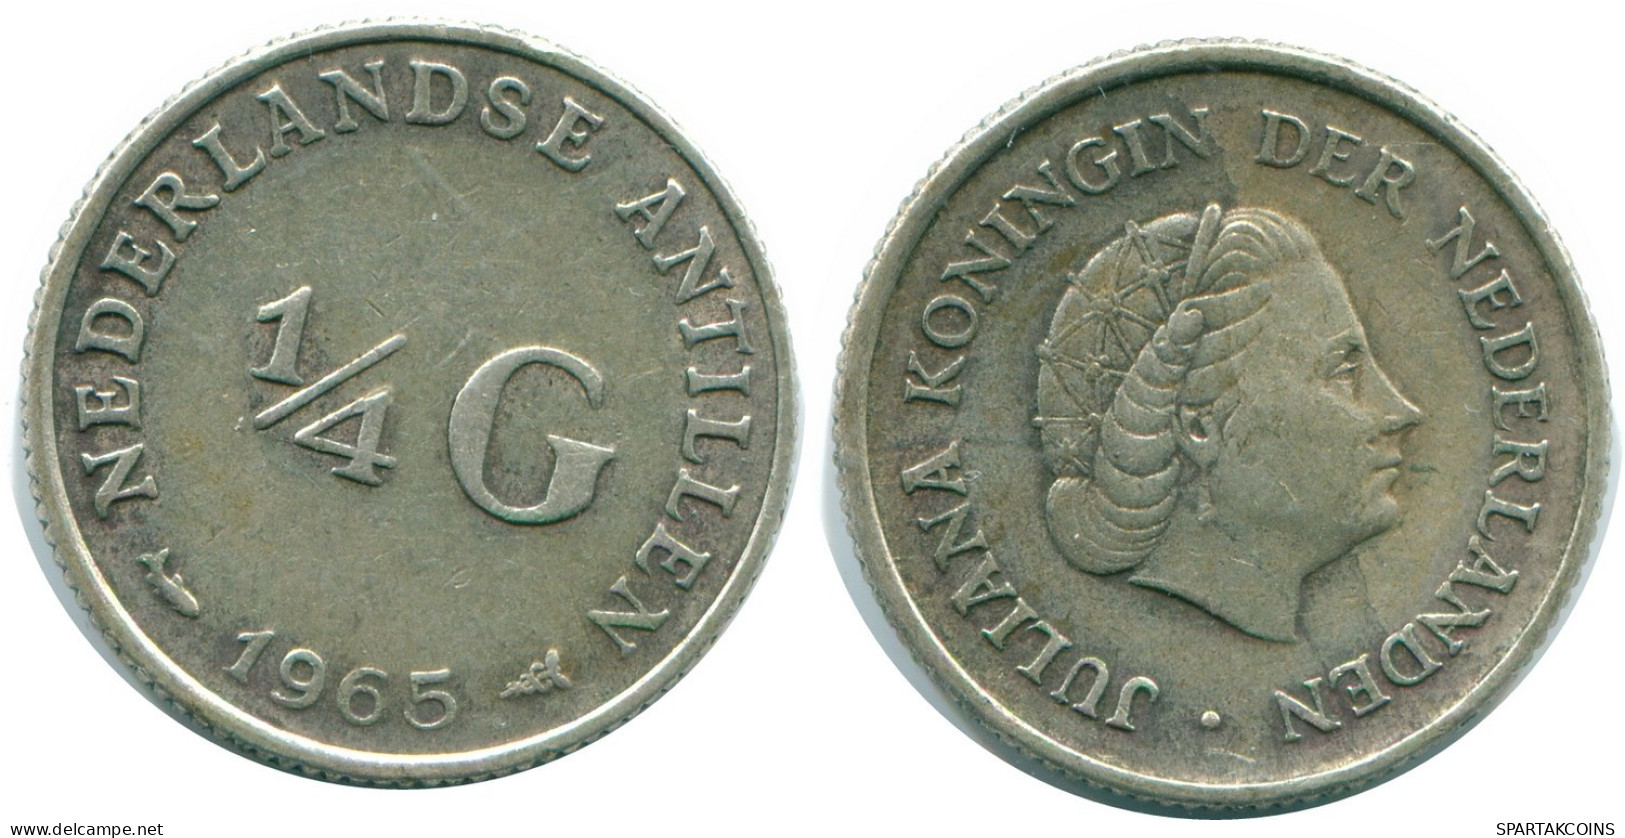 1/4 GULDEN 1965 NETHERLANDS ANTILLES SILVER Colonial Coin #NL11356.4.U.A - Antilles Néerlandaises